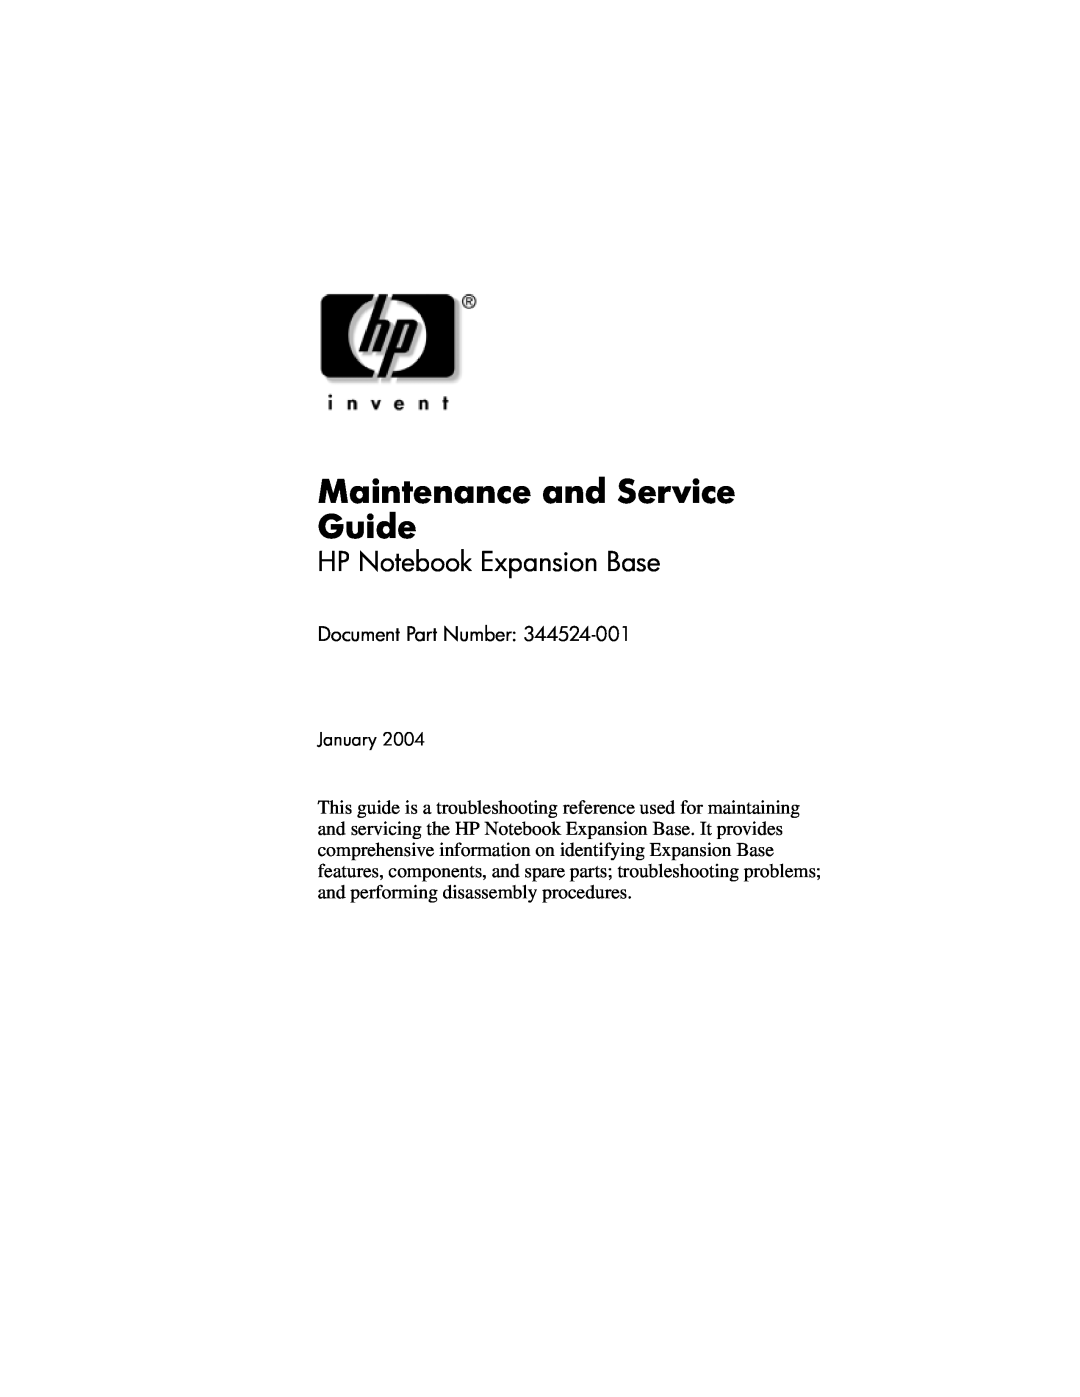 HP R3070US, R3065US, R3060US, R3050US, R3056RS manual Startup Guide, Compaq Notebook Series, Document Part Number, November 